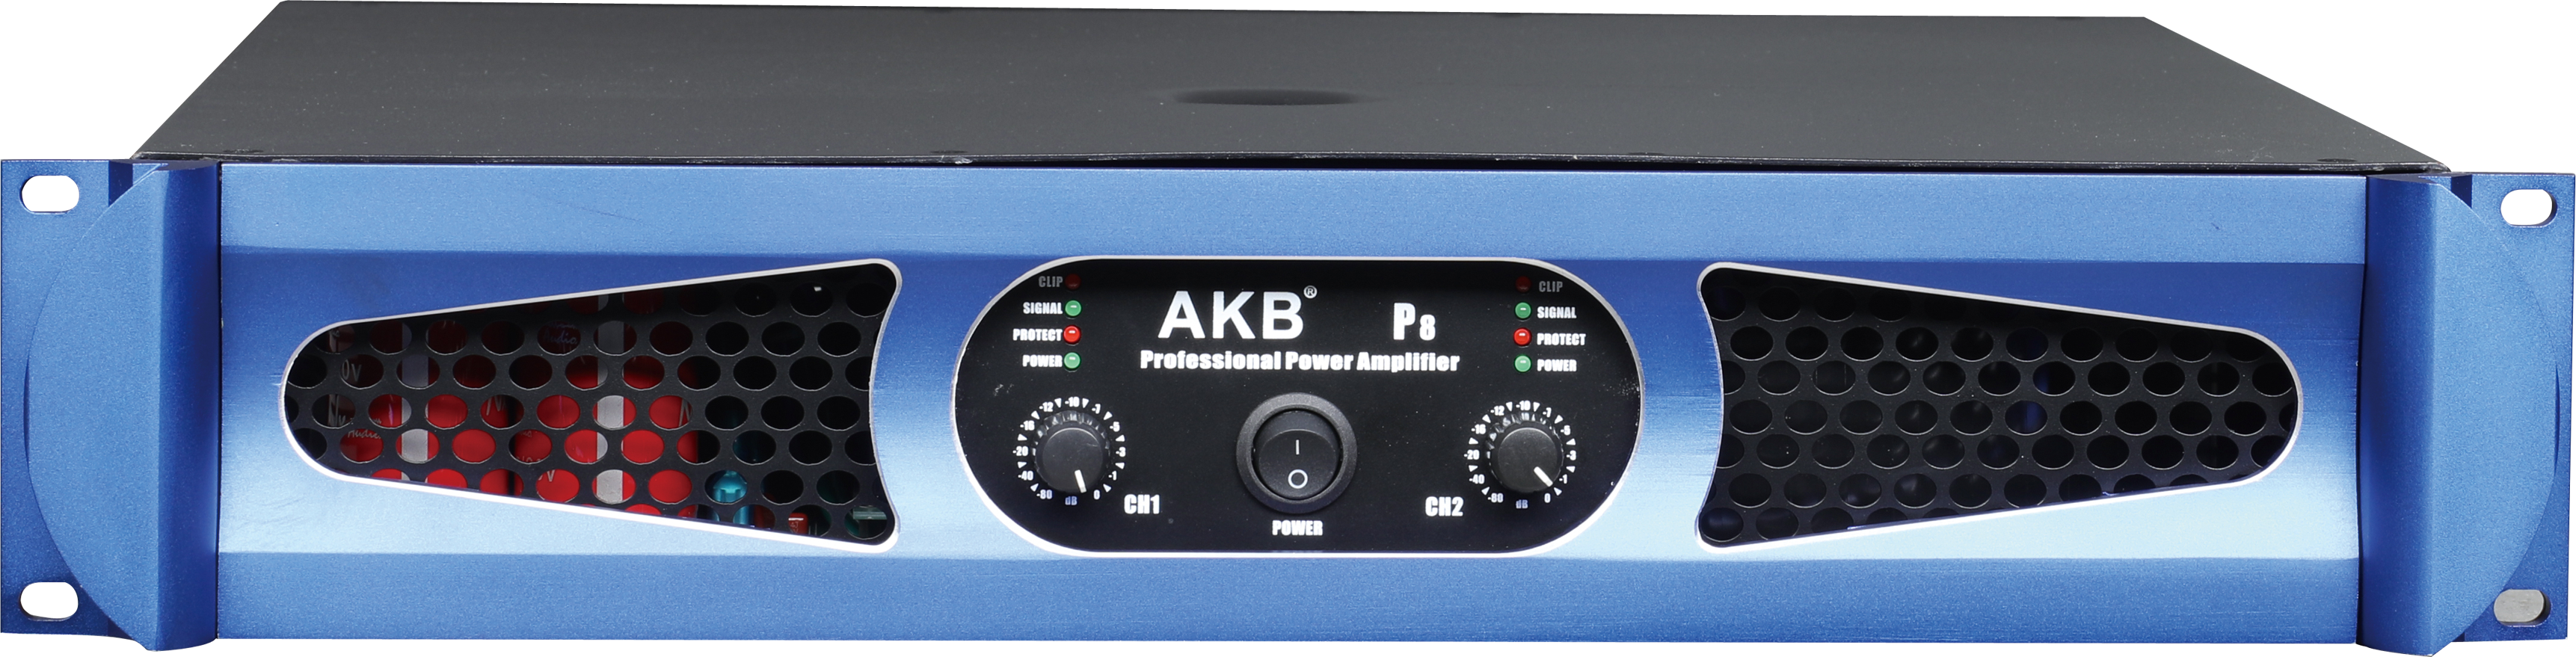 P series power amplifier sound standard speaker amplifier